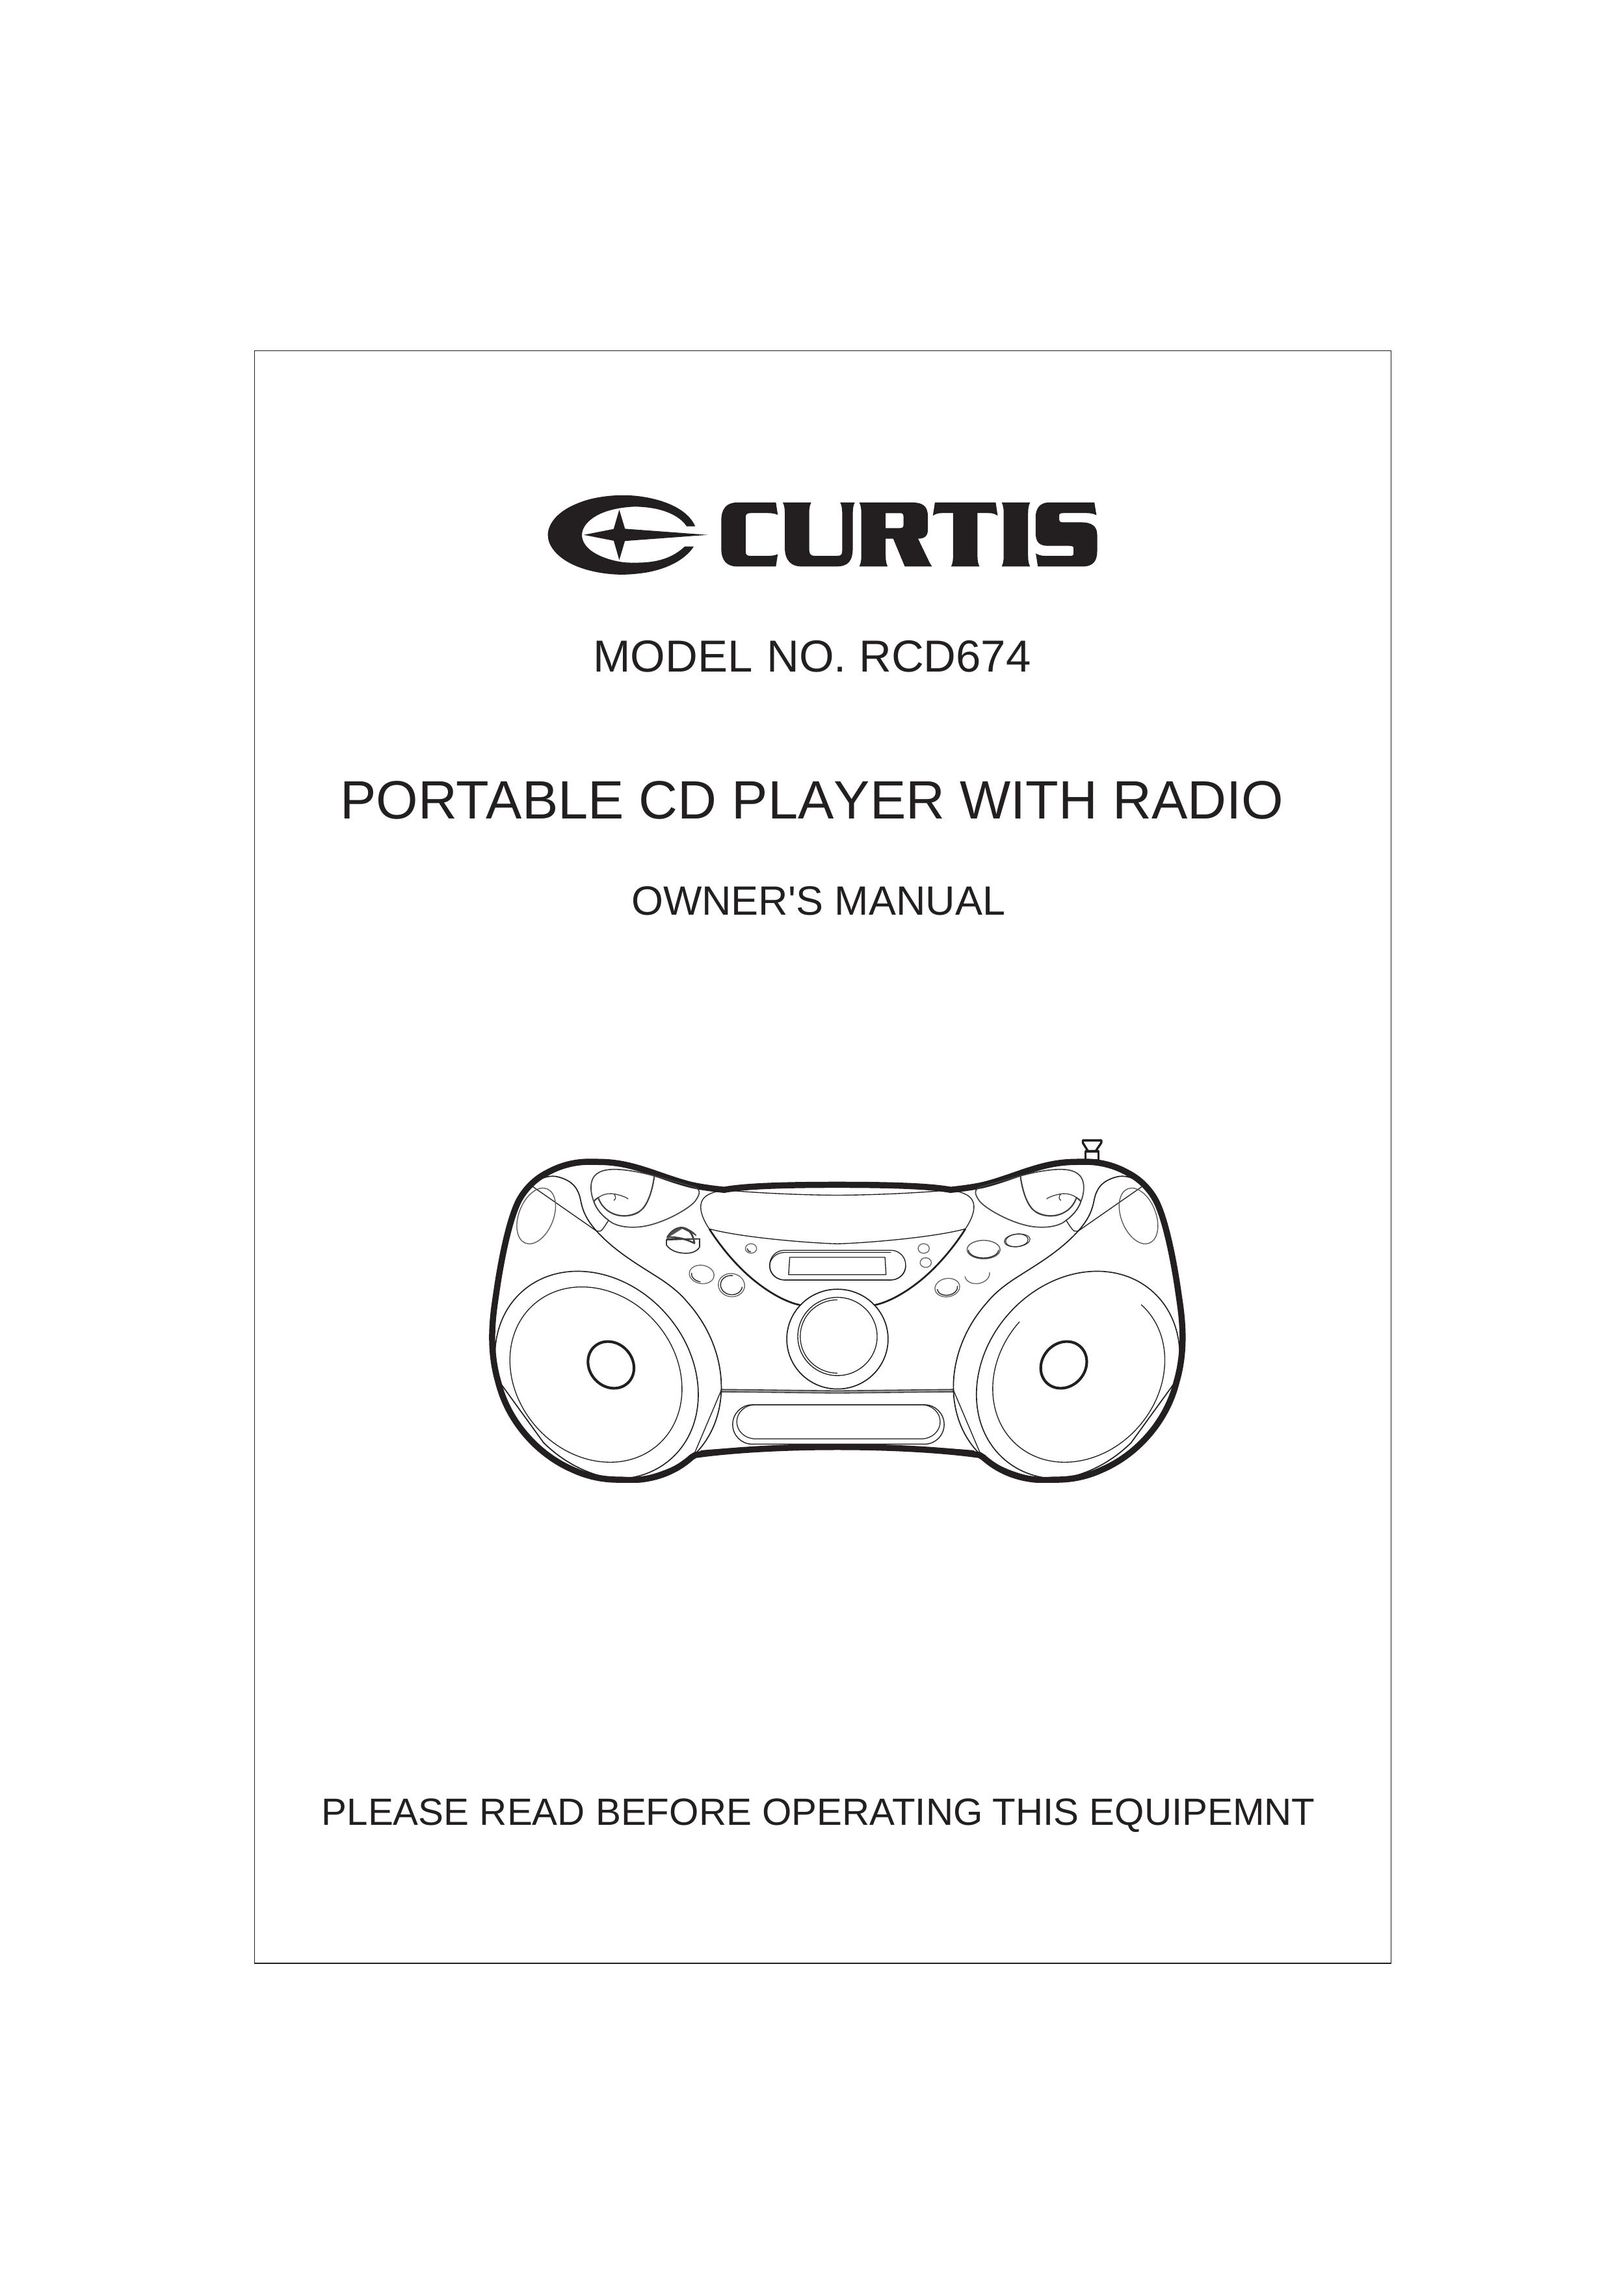 Curtis RCD674 Portable CD Player User Manual